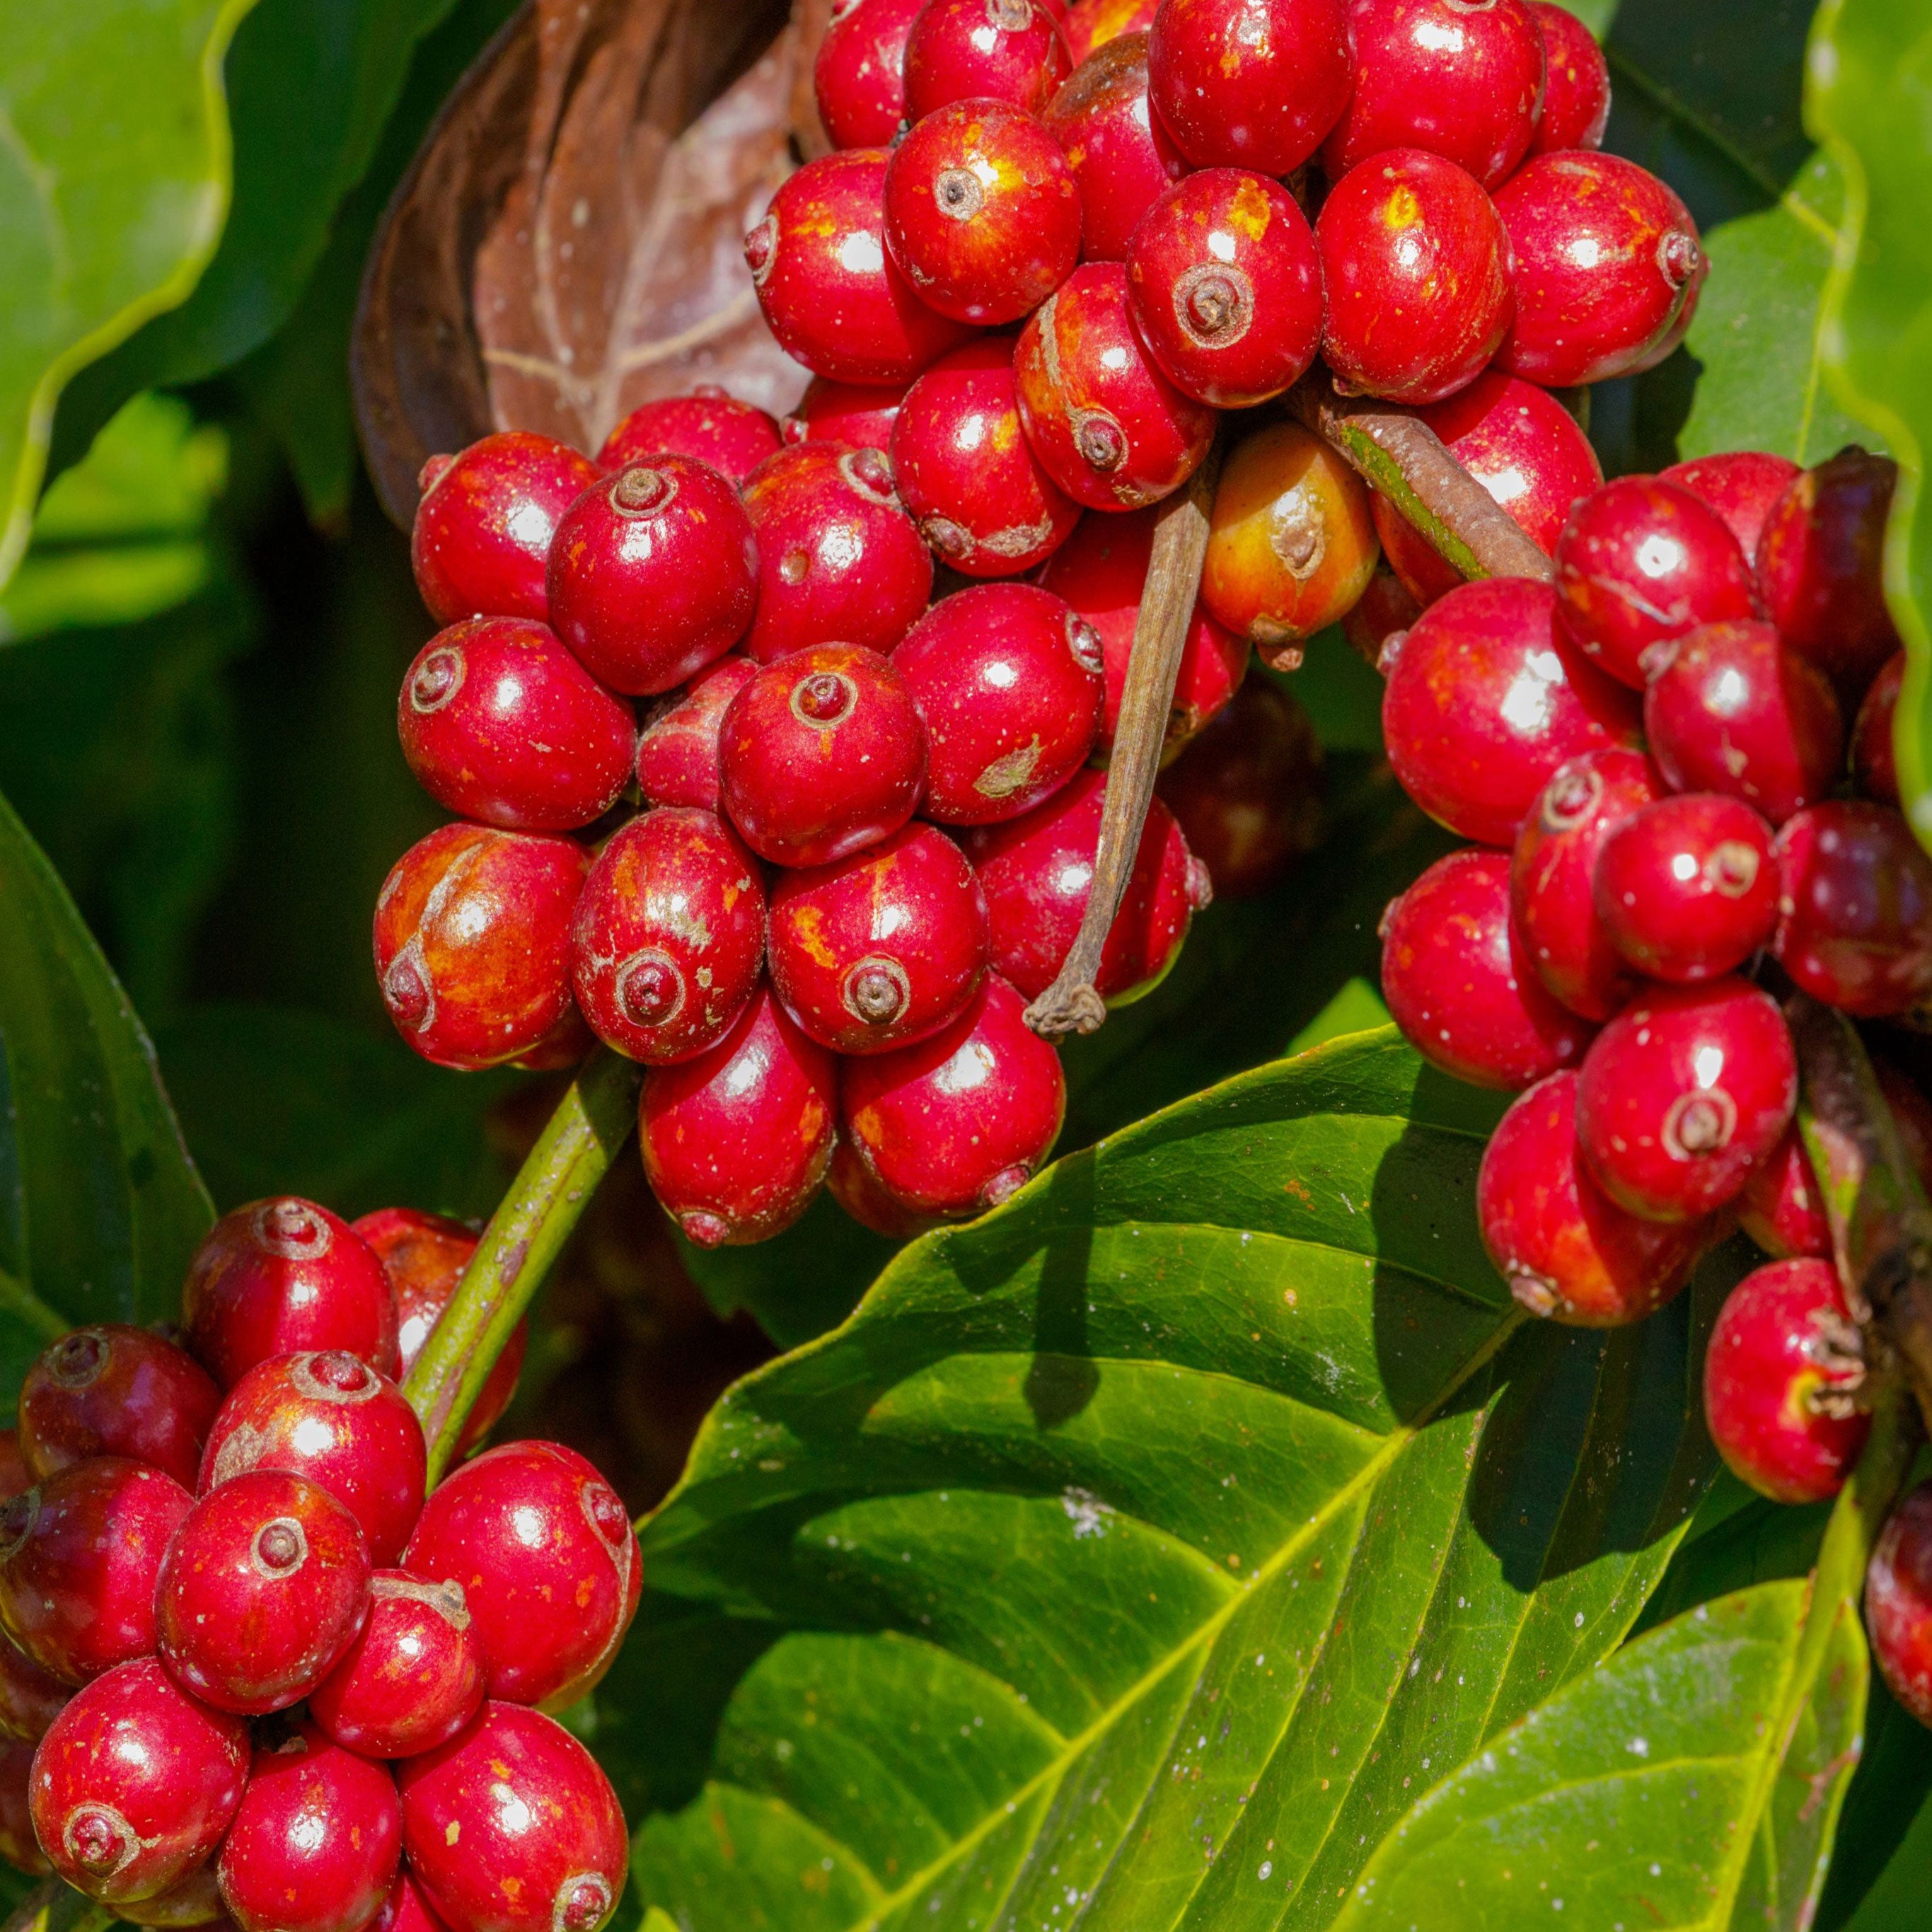 Coffee fruit/seed